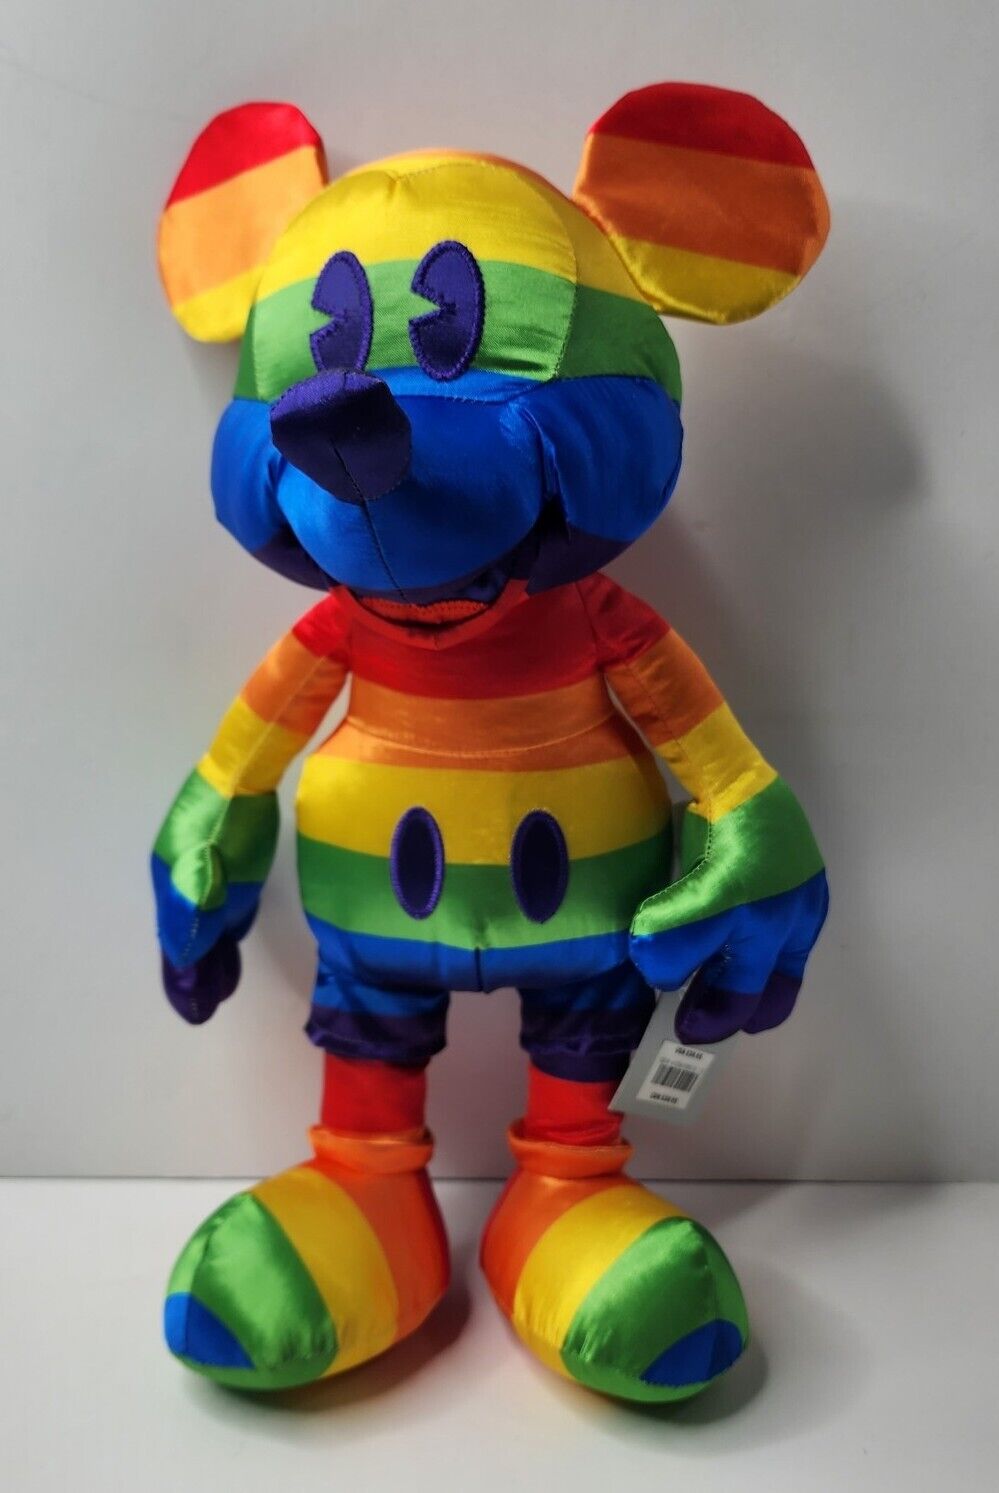 2019 Disney Mickey Mouse Plush - Rainbow/Pride - New w/ Tags 